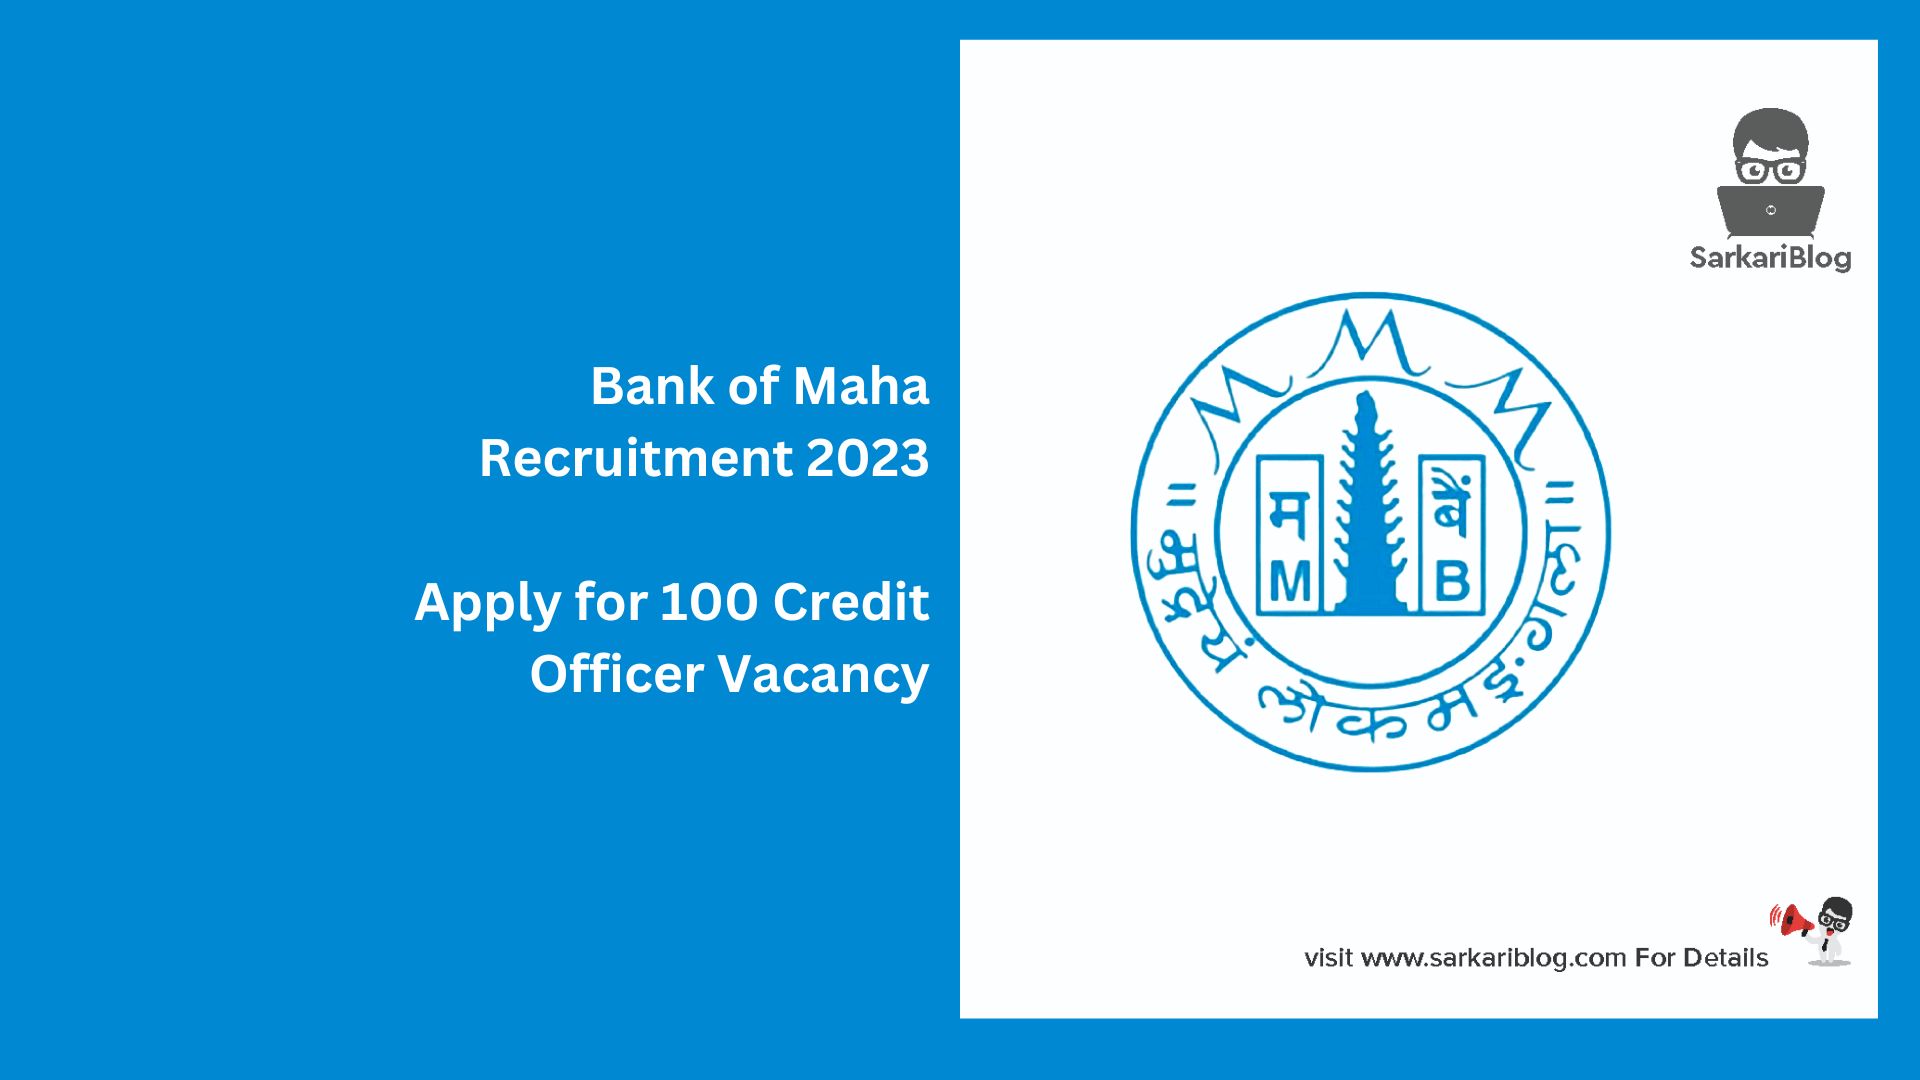 Bank of Maha Recruitment 2023